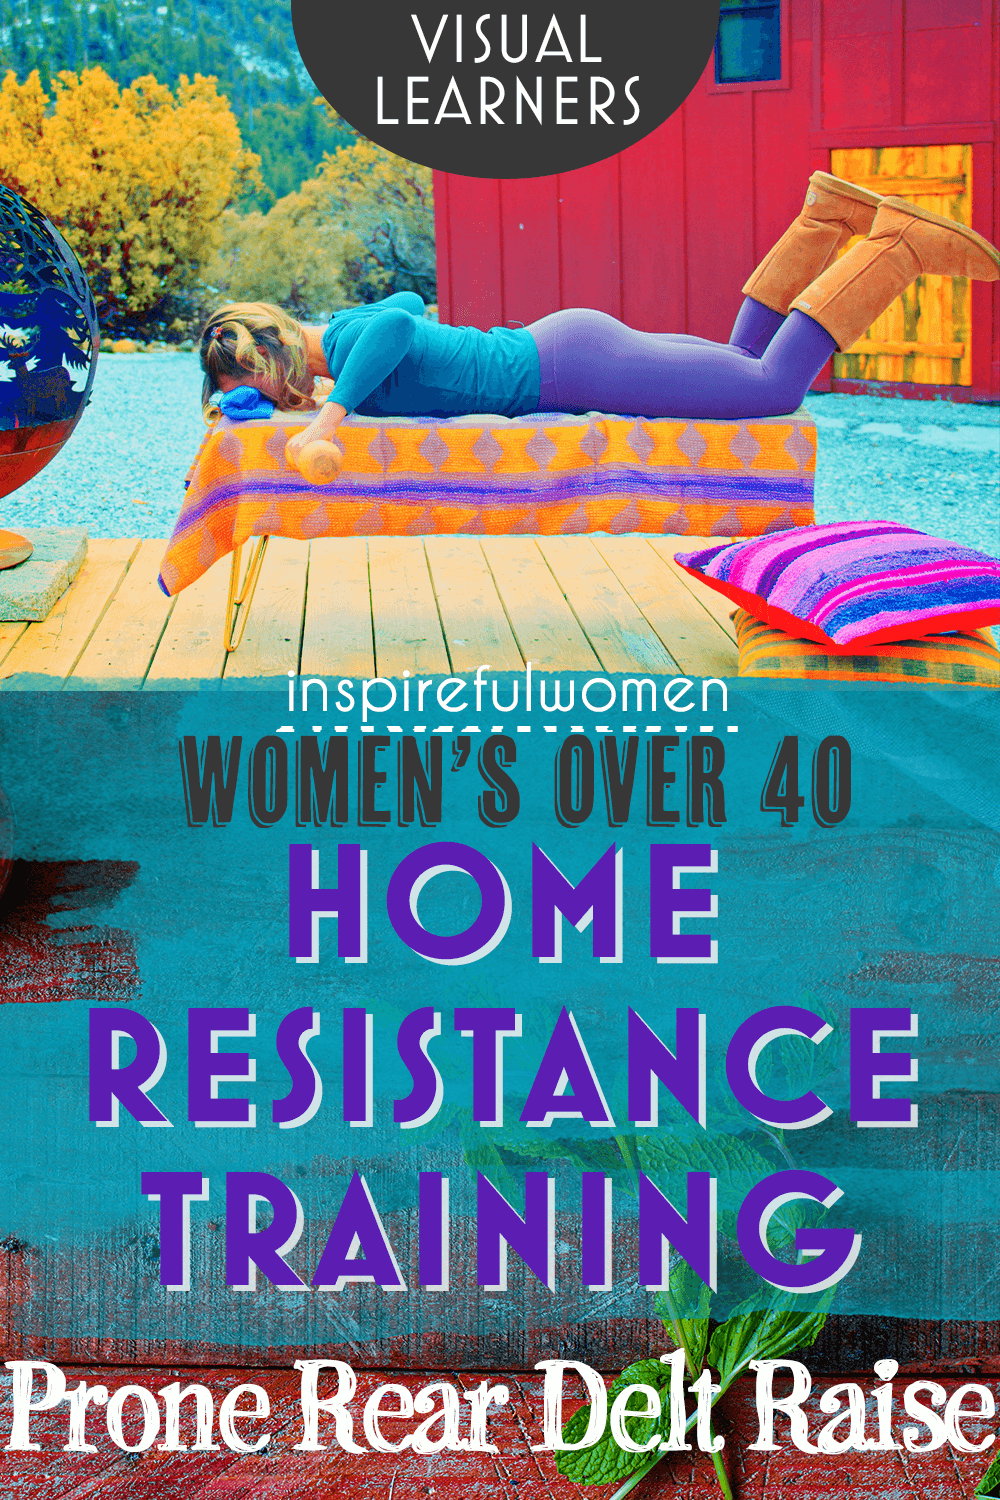 prone-rear-delt-raise-dumbbell-shoulder-resistance-training-at-home-women-40+